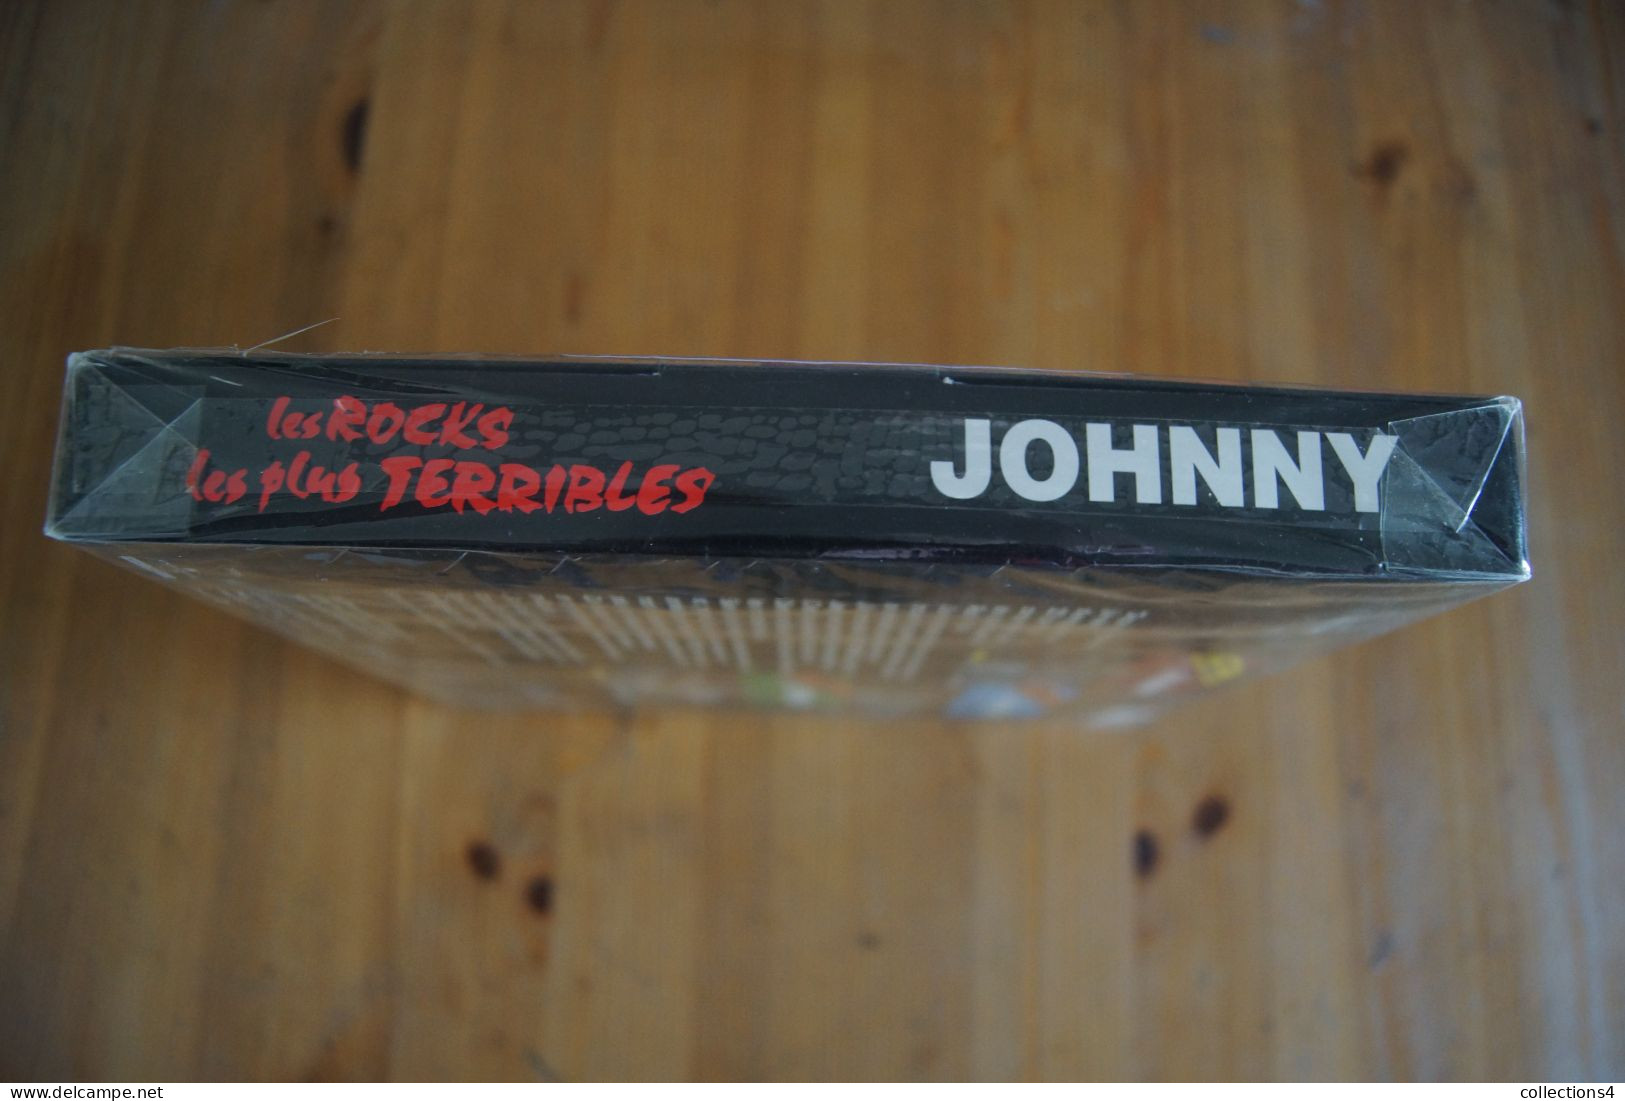 JOHNNY HALLYDAY LES ROCKS LES PLUS TERRIBLES COFFRET 3CD NEUF SCELLE VALEUR+ NUMEROTE 08329 - Rock